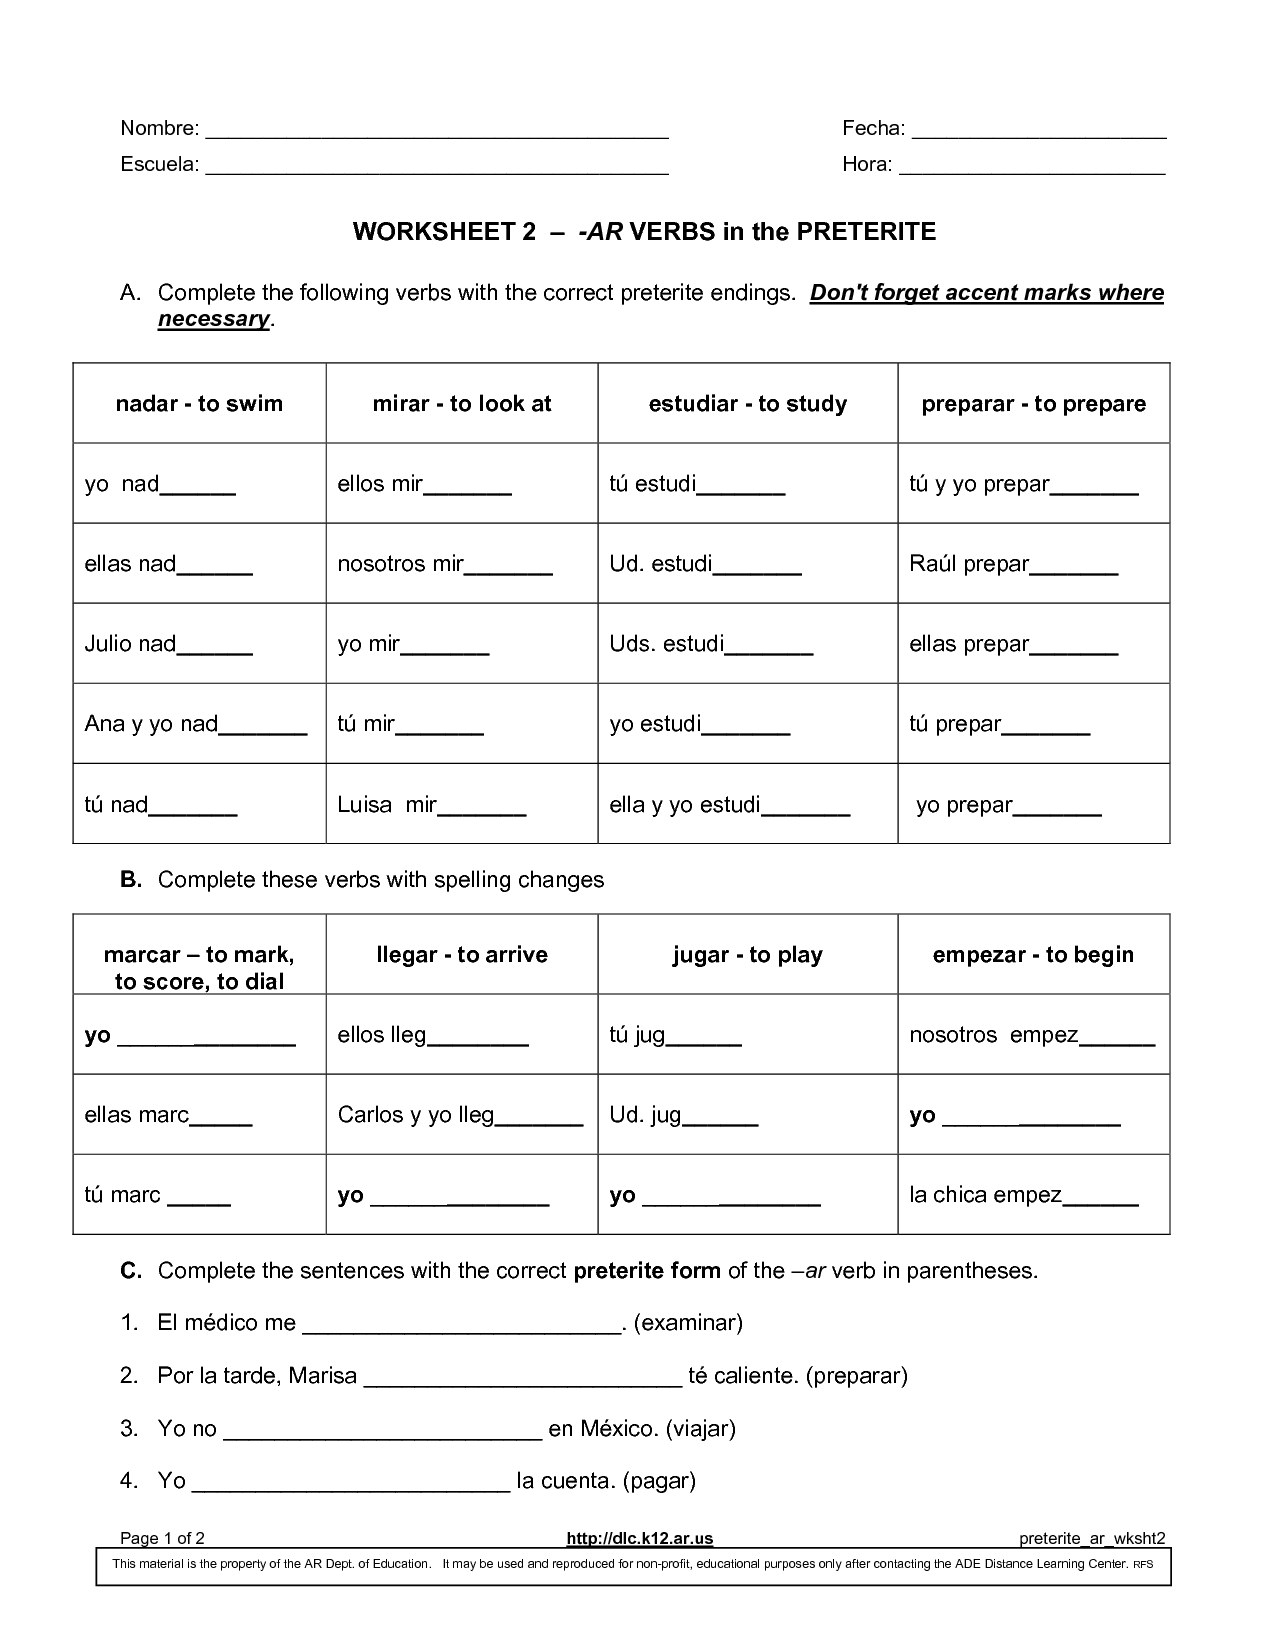 ar-preterite-verbs-worksheet-answer-key-bhe